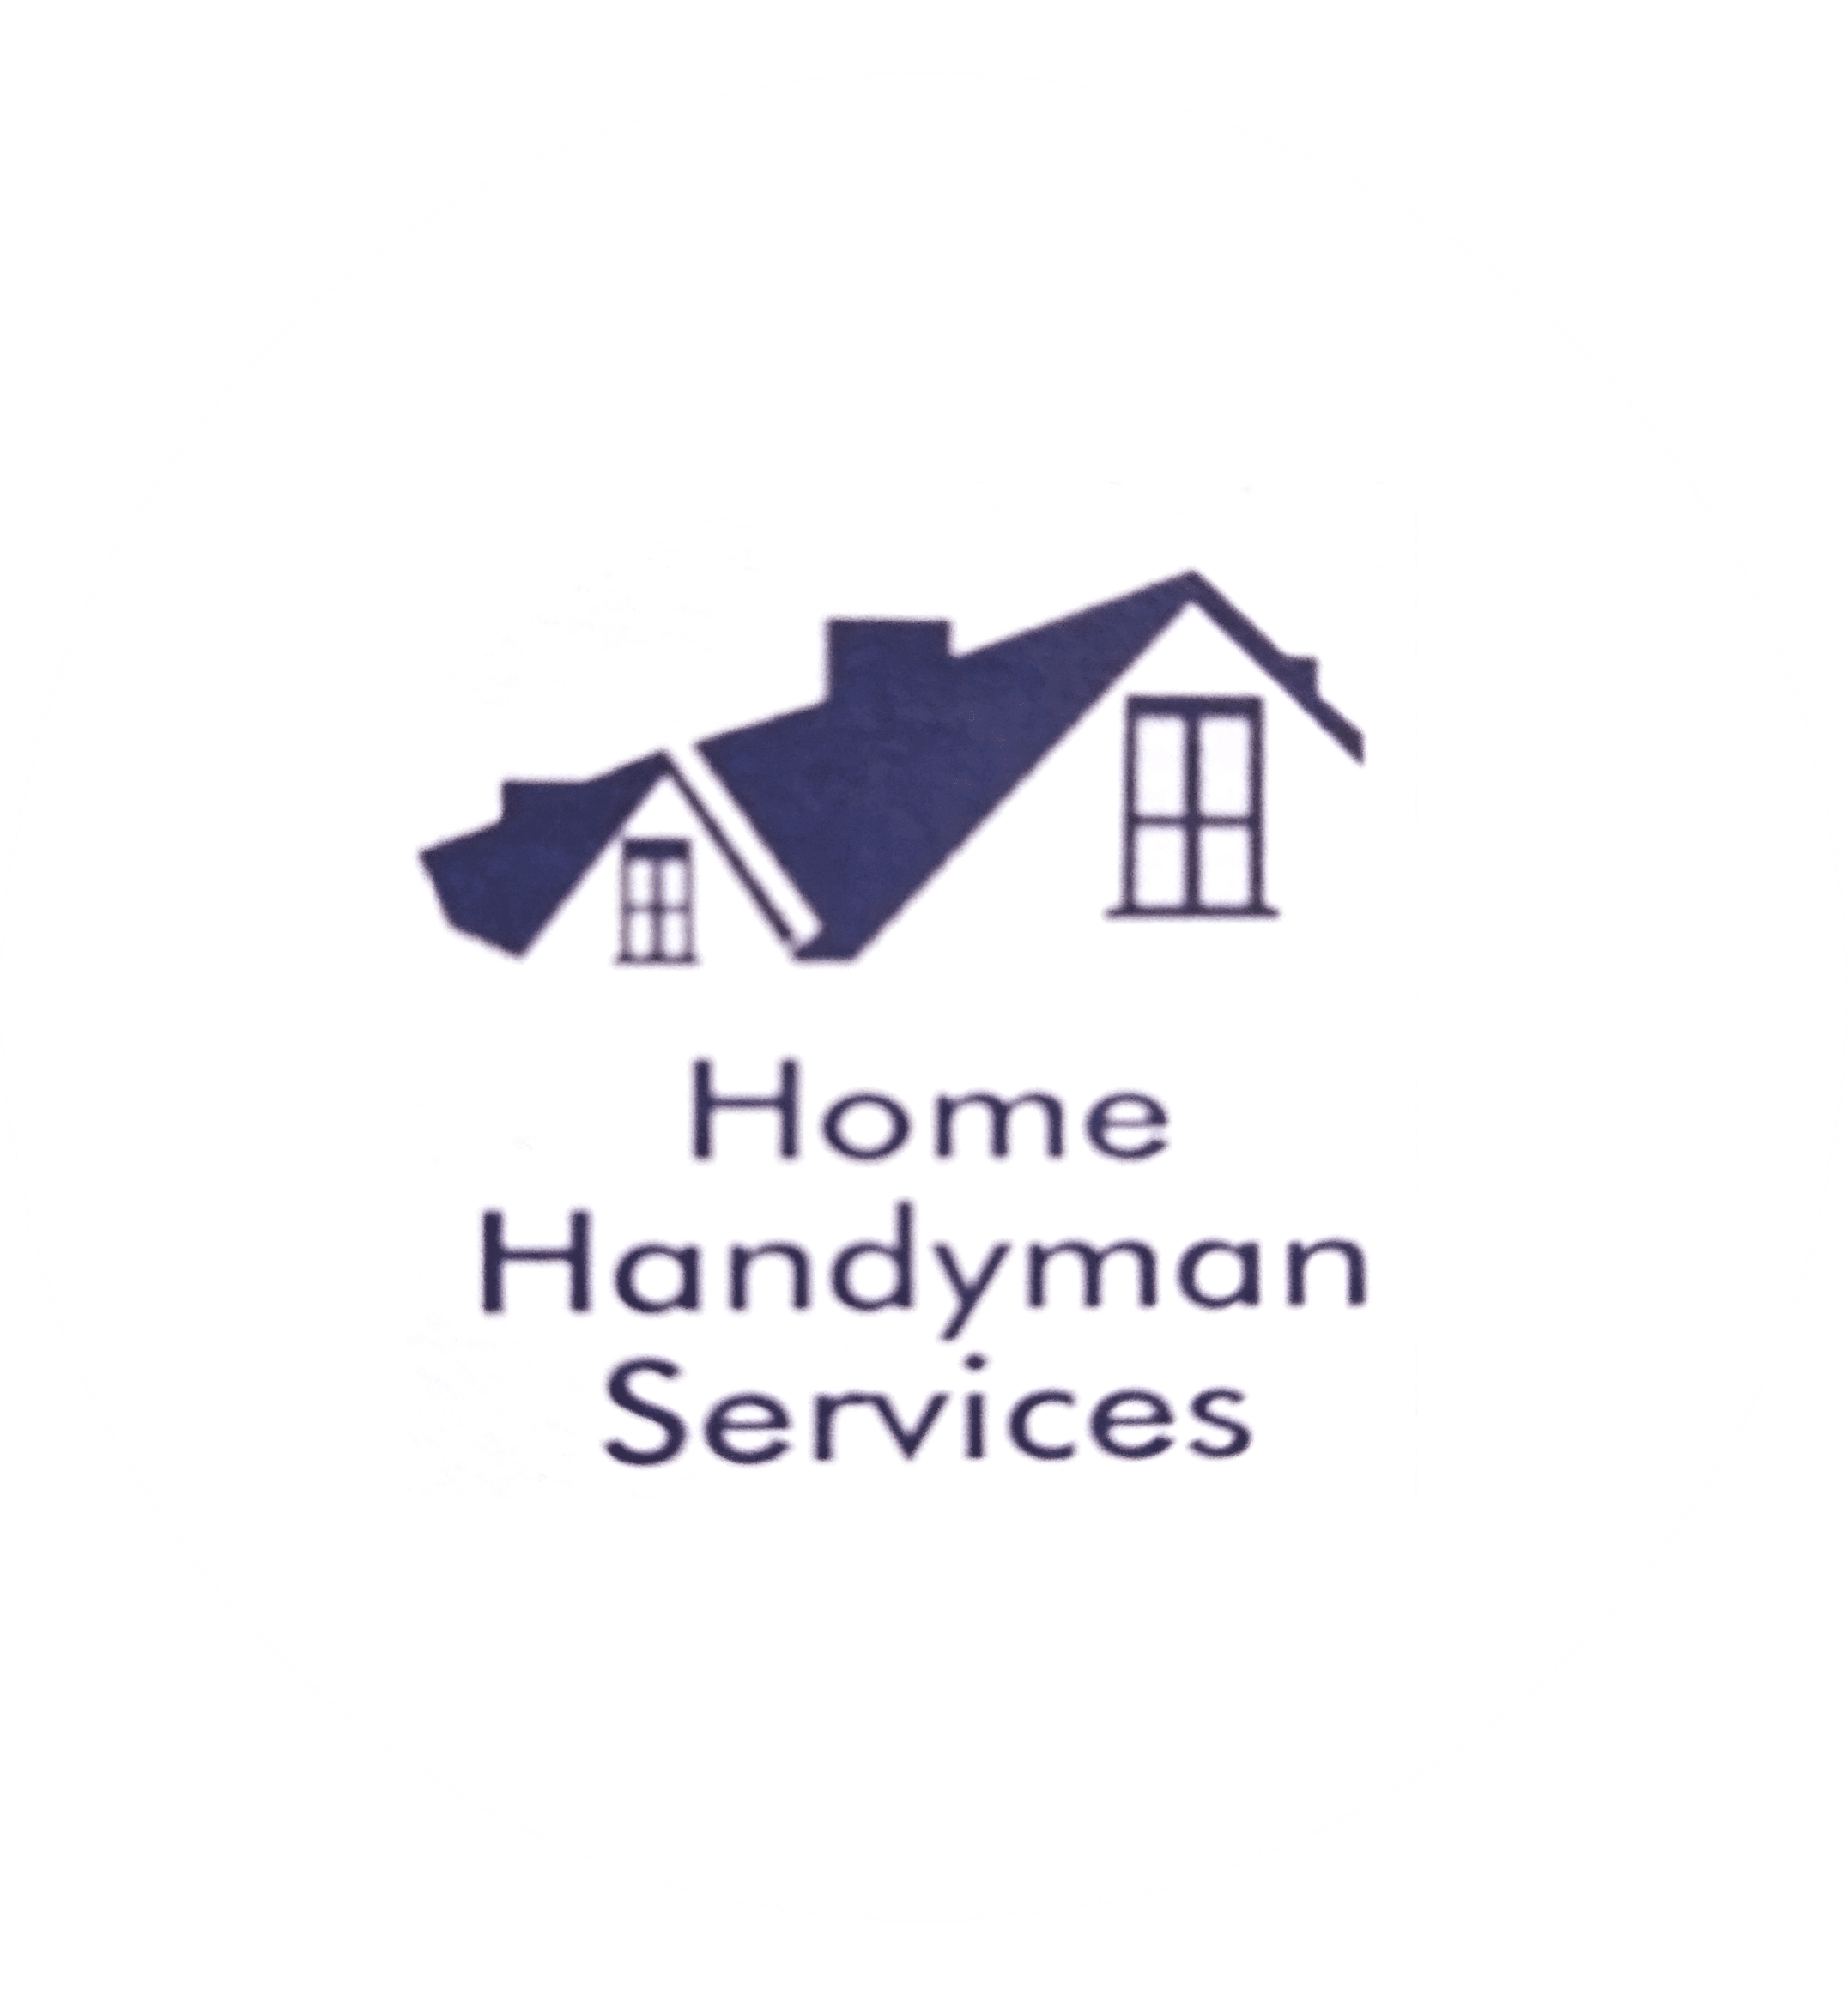 Home Handyman Services